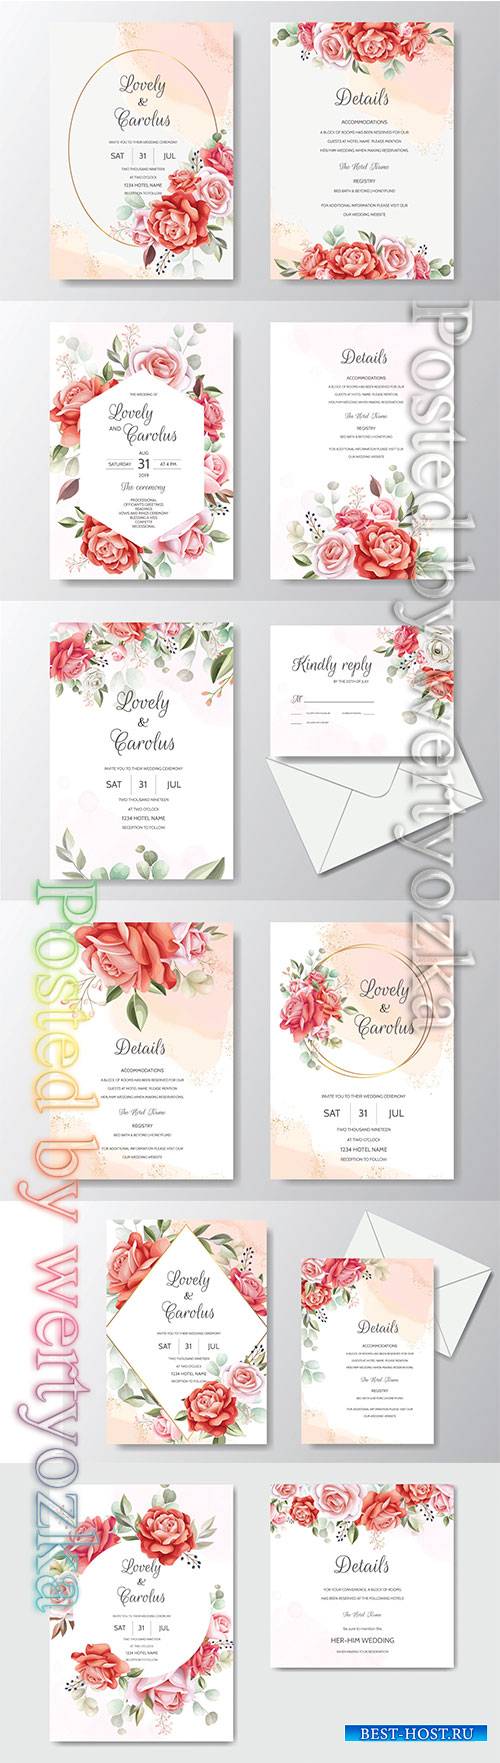 Beautiful floral wreath wedding invitation card template # 5